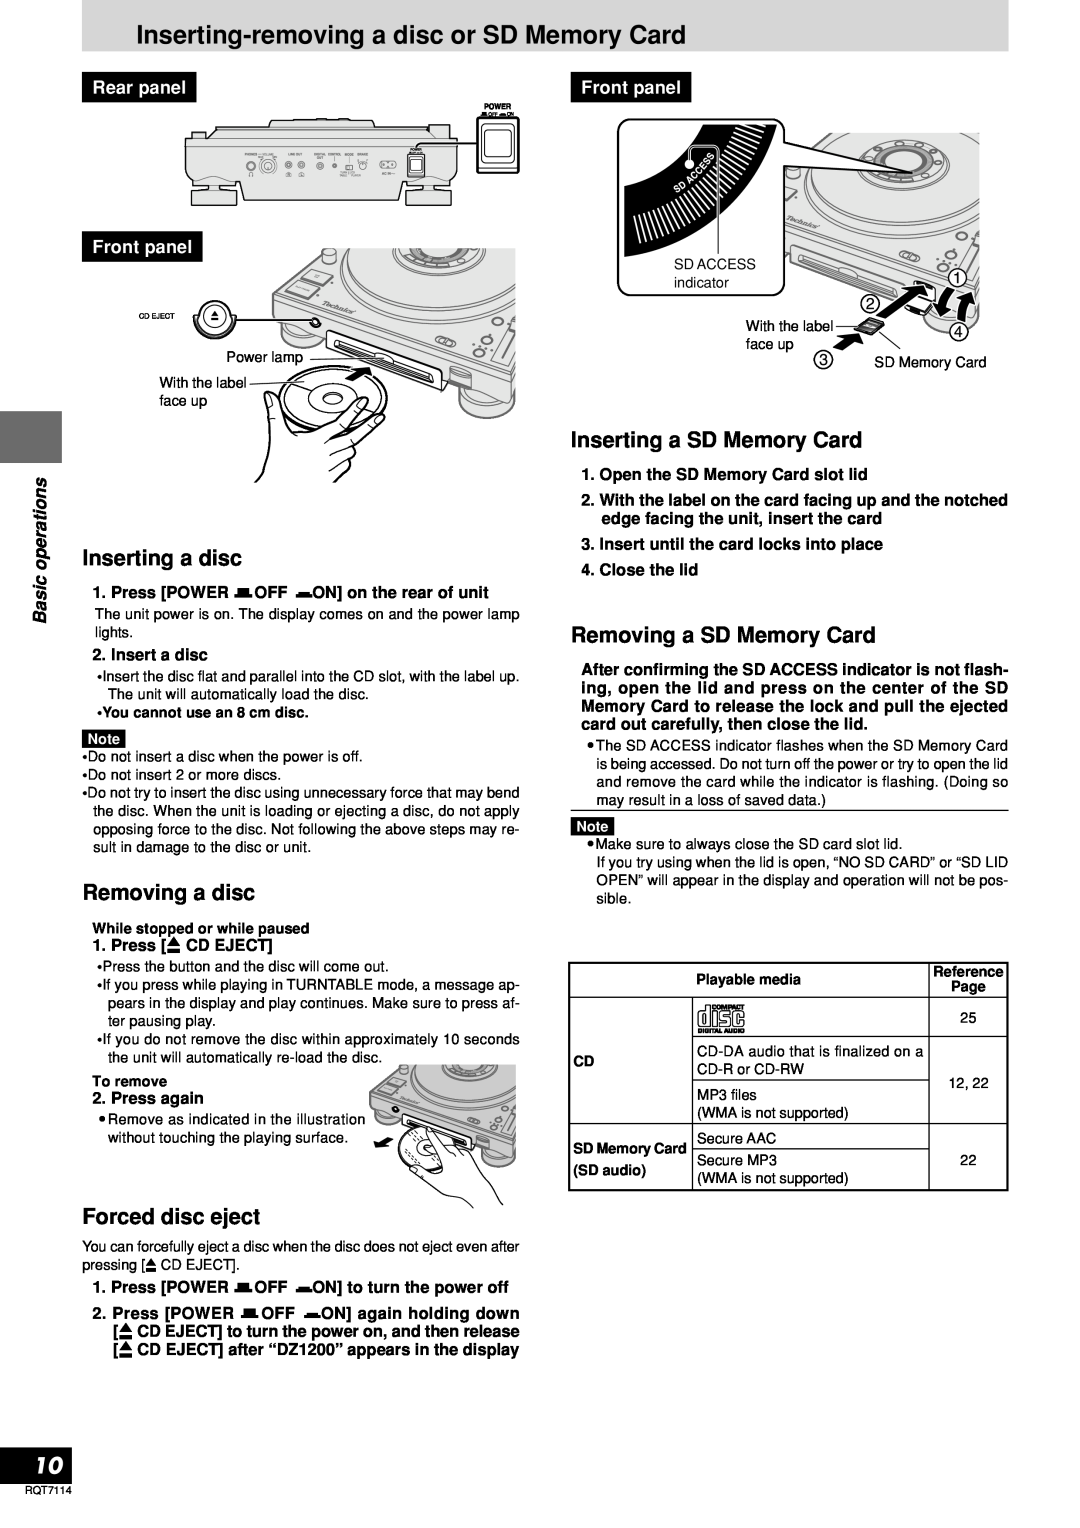 Panasonic SL-DZ1200 manual Inserting-removinga disc or SD Memory Card, Inserting a disc, Removing a disc, Forced disc eject 